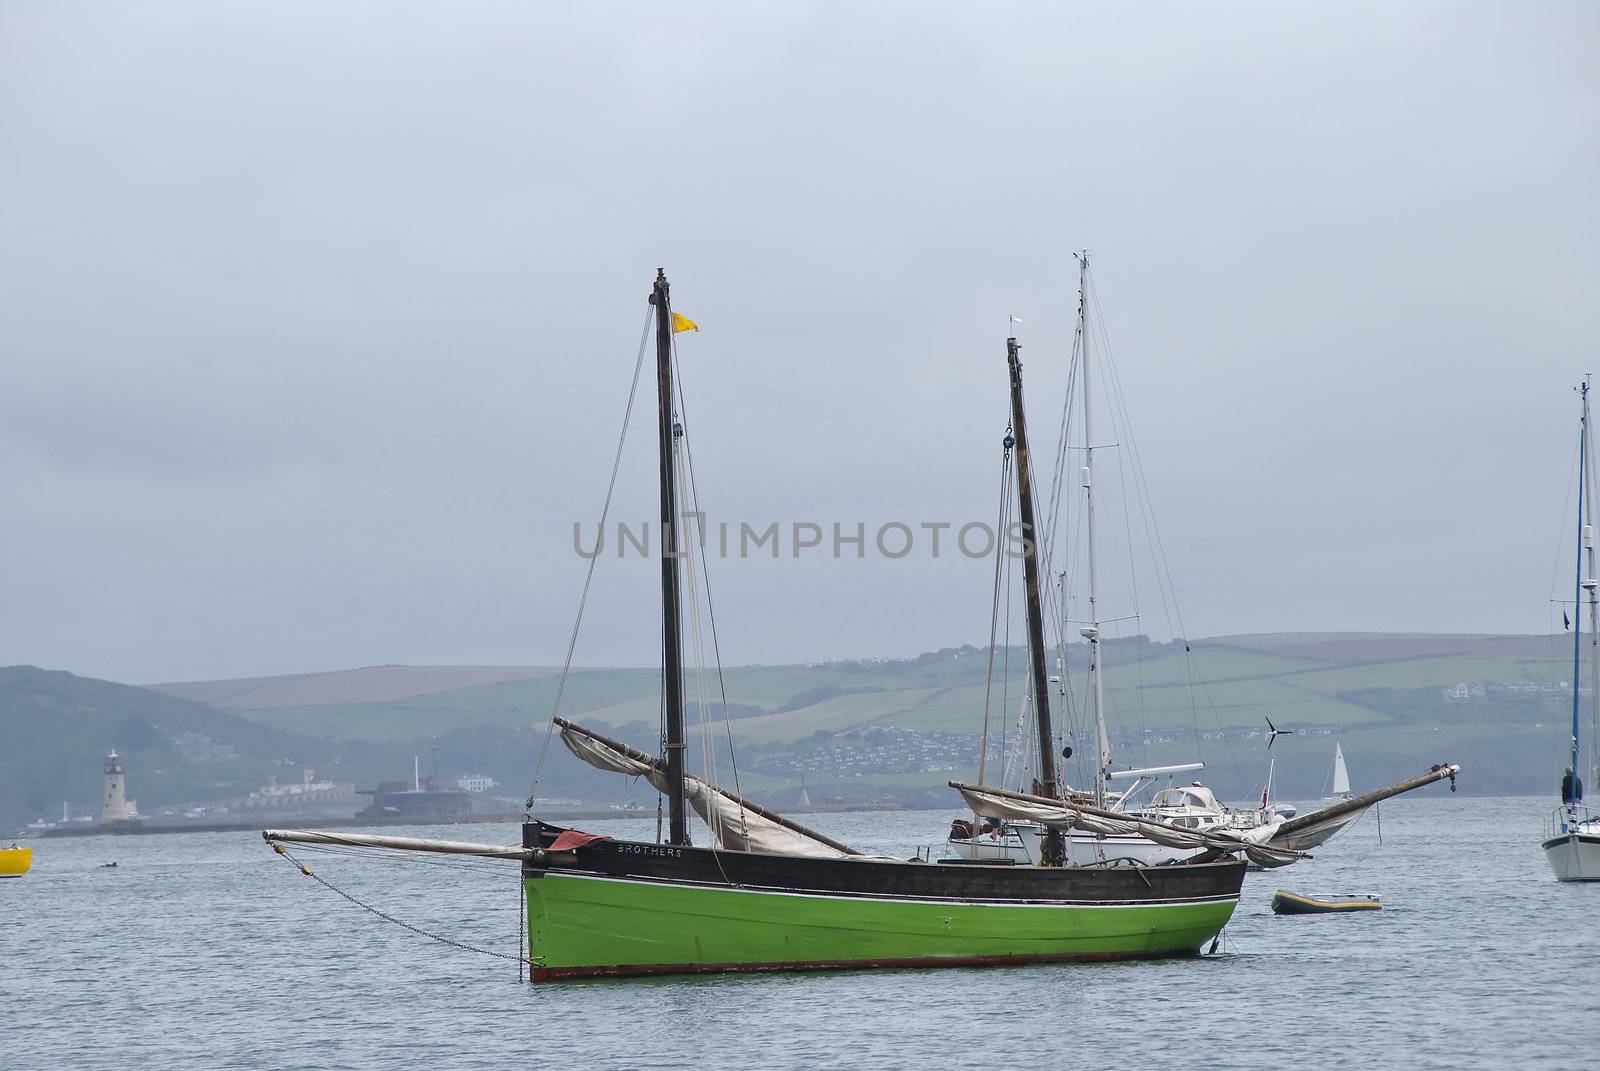 A Green and Black Cornish Fishing Lugger